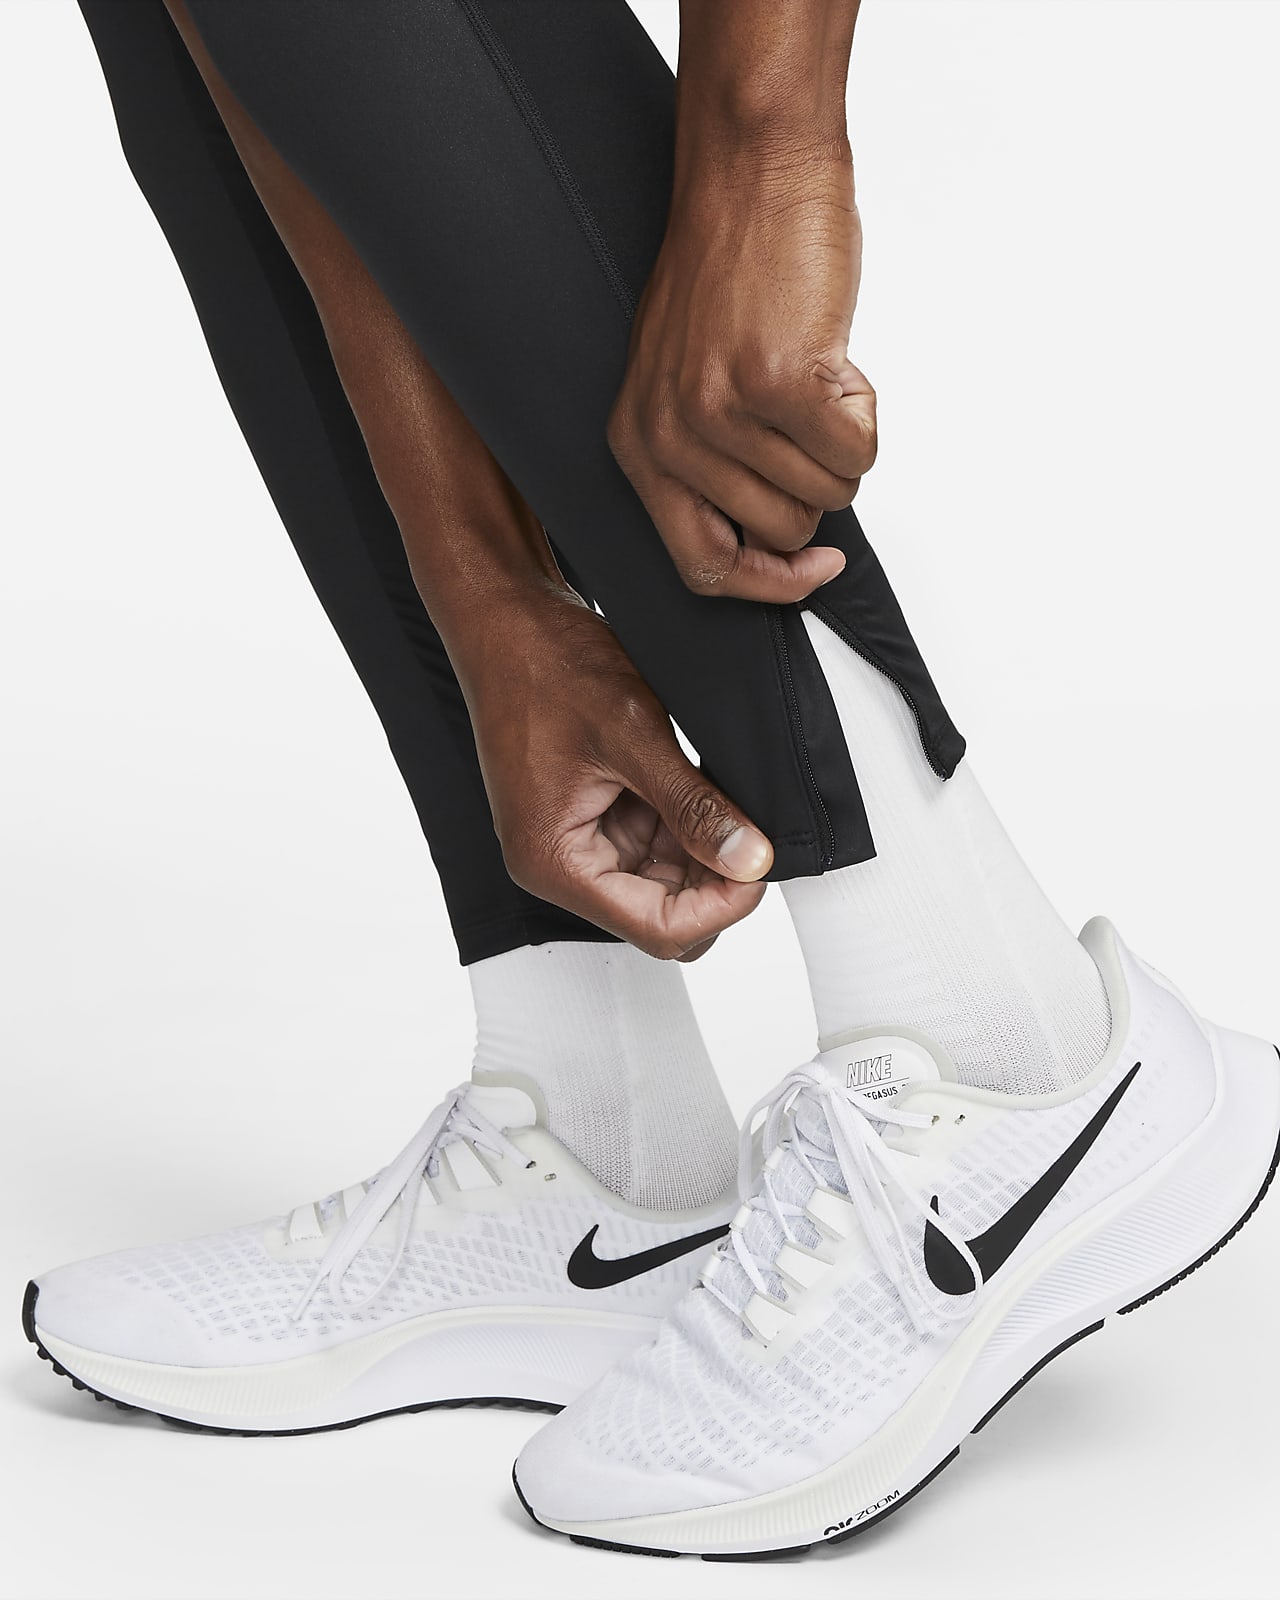 $80 NEW Nike Phenom Elite Men's Training Running Tights Pants